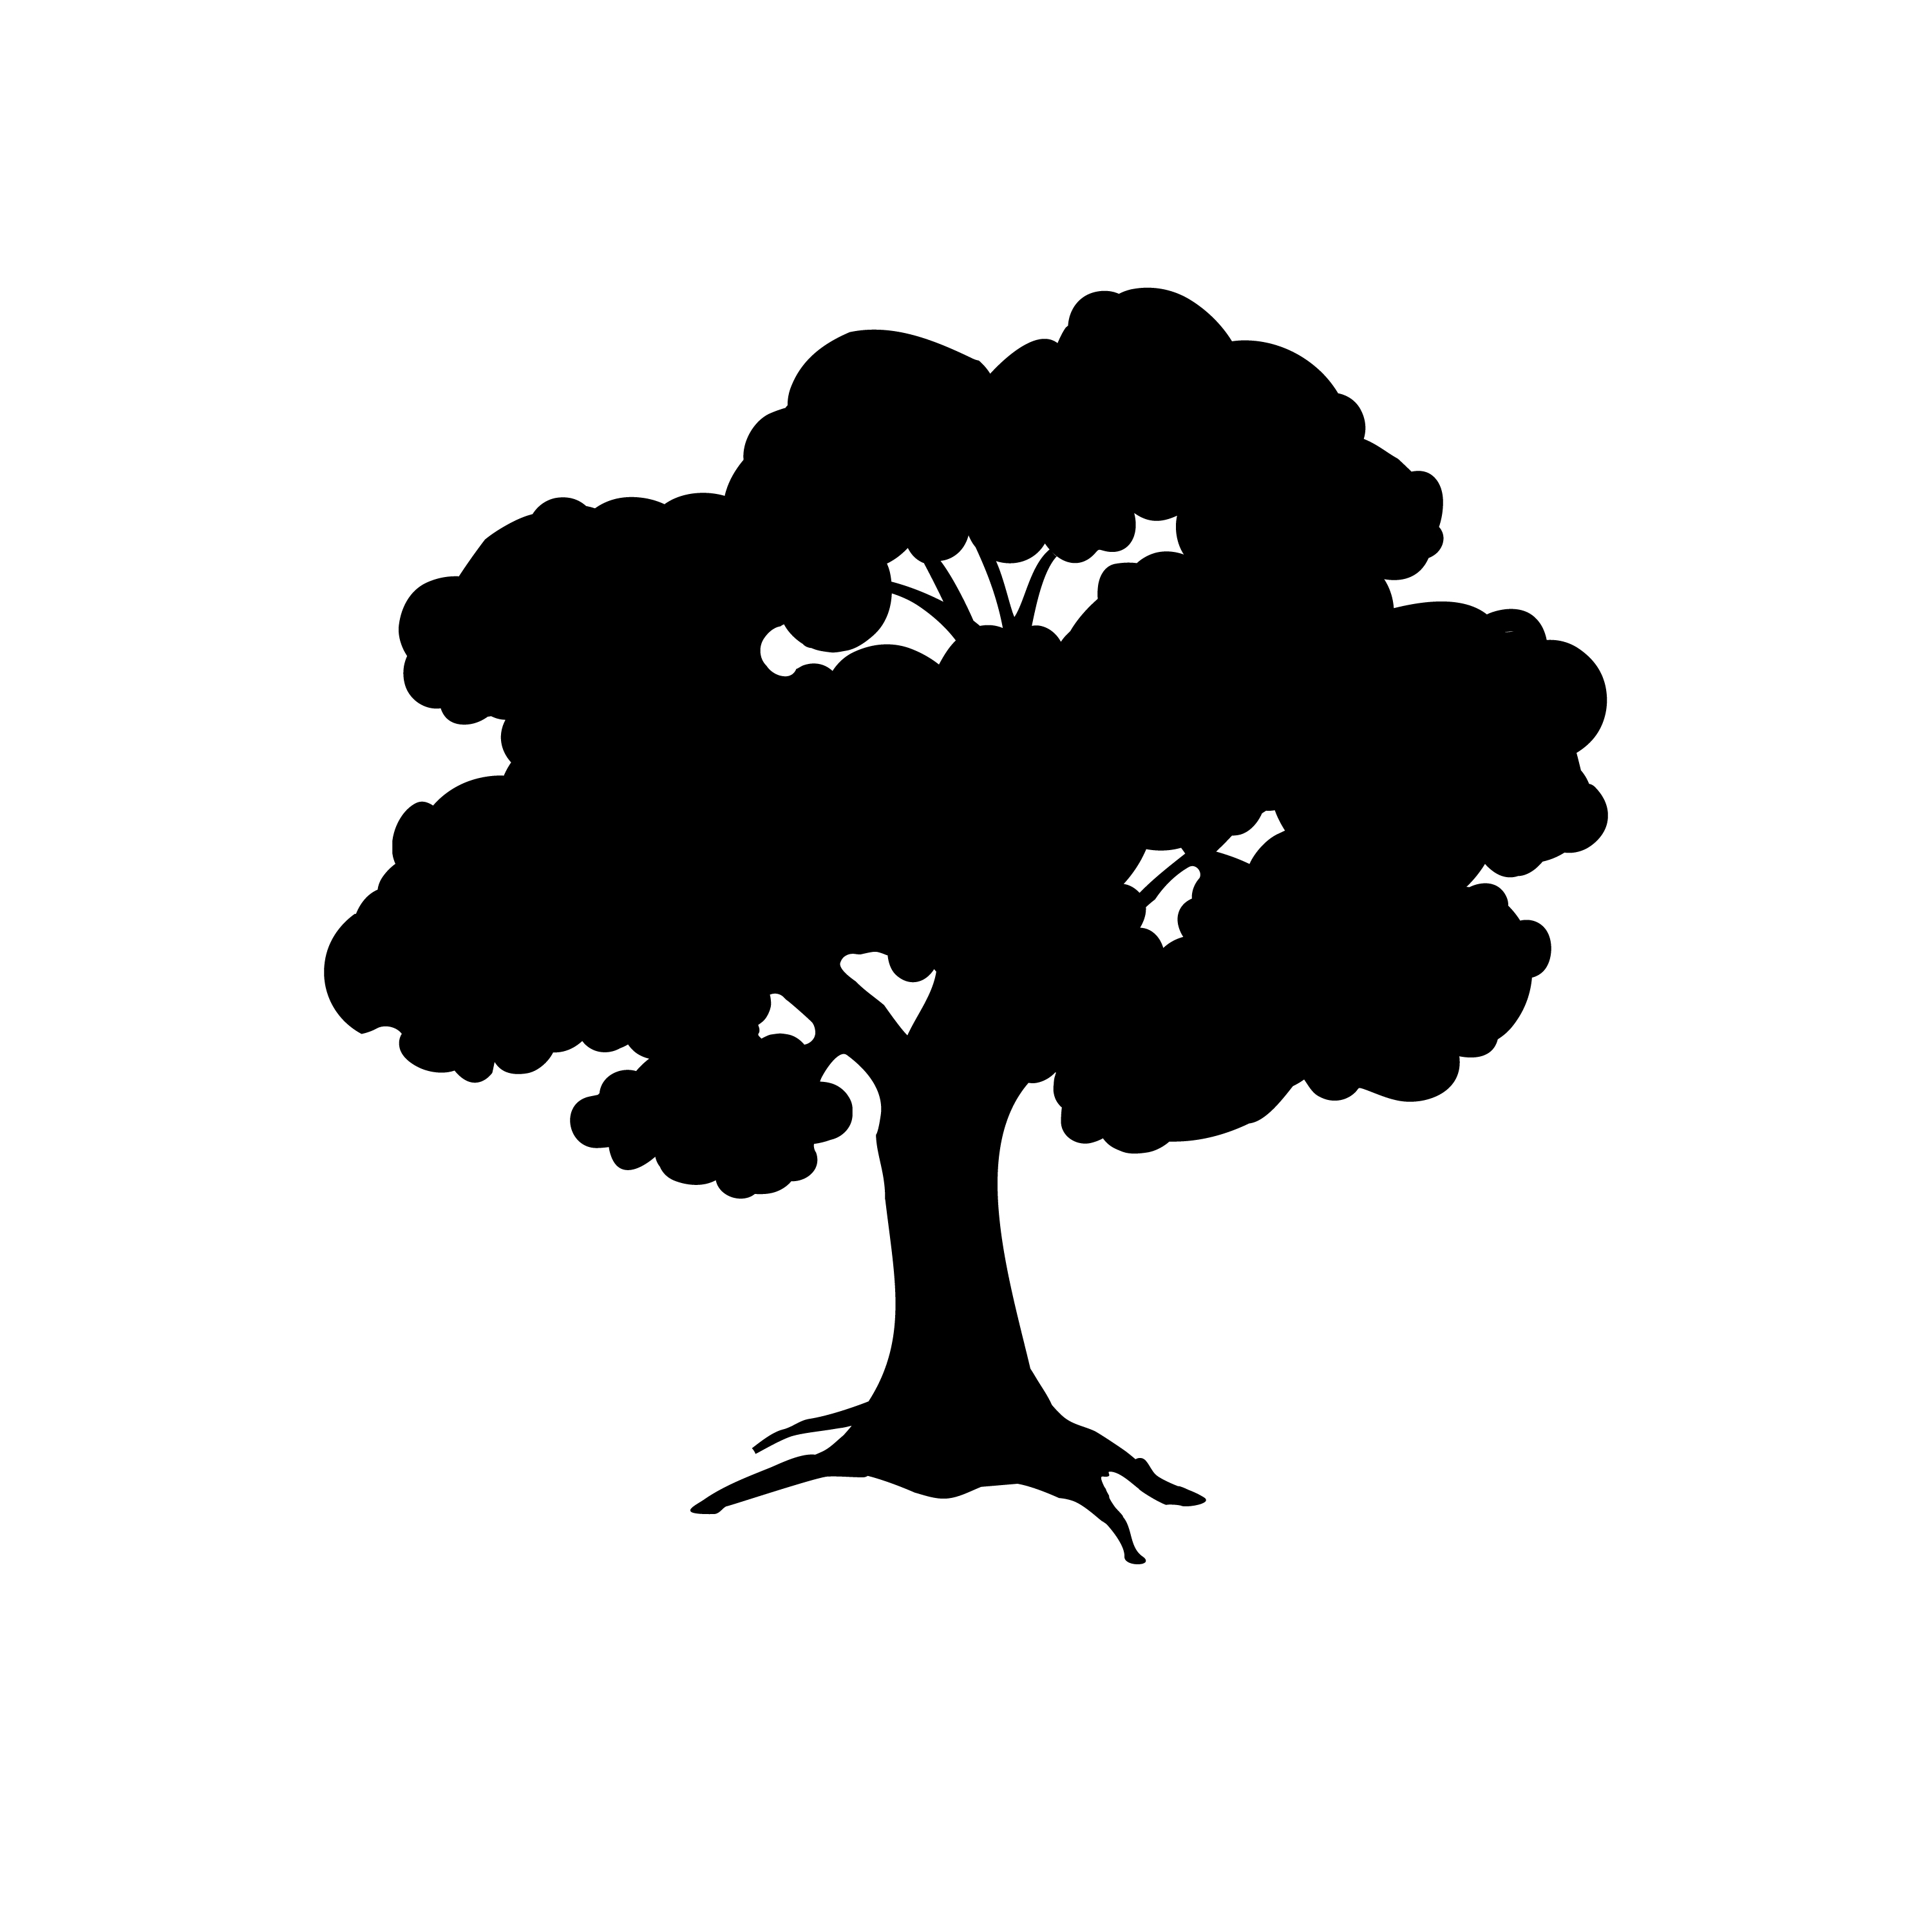 oak tree design